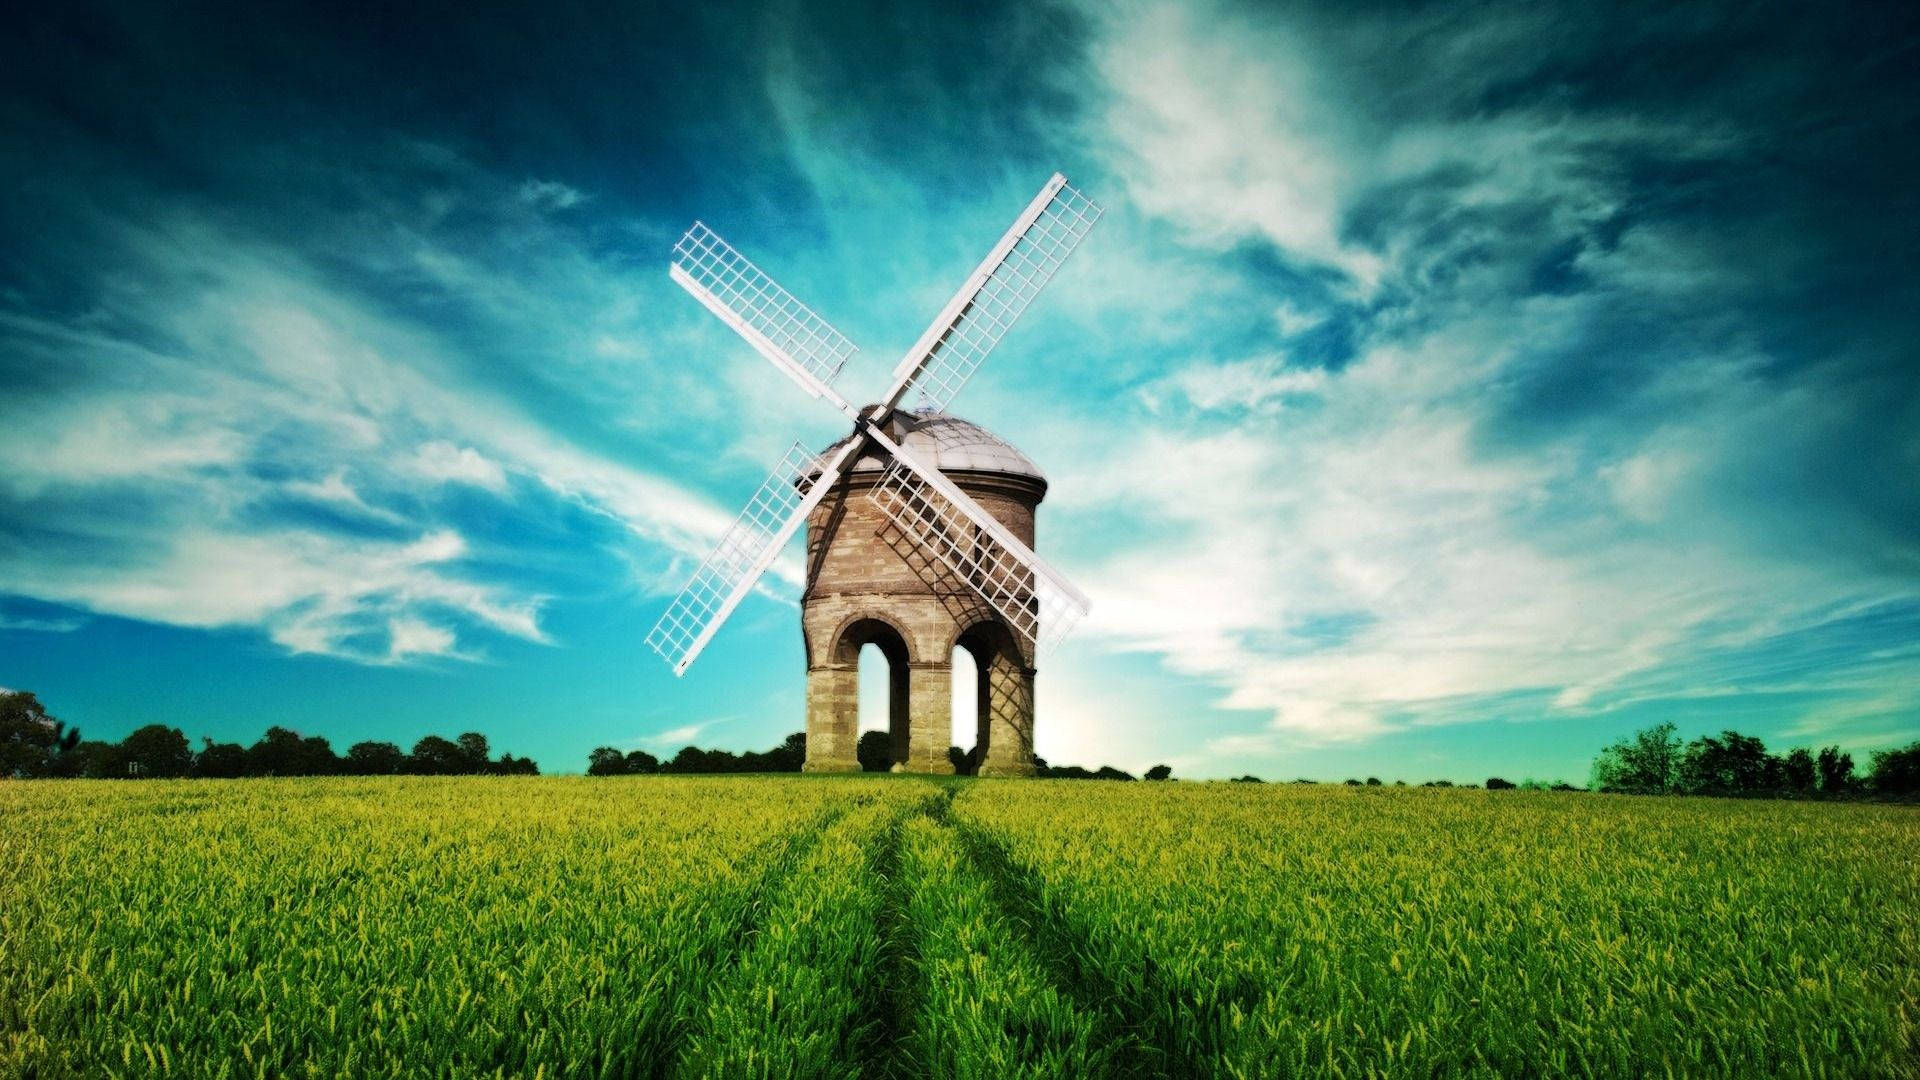 Windmill In Grass Field Picture